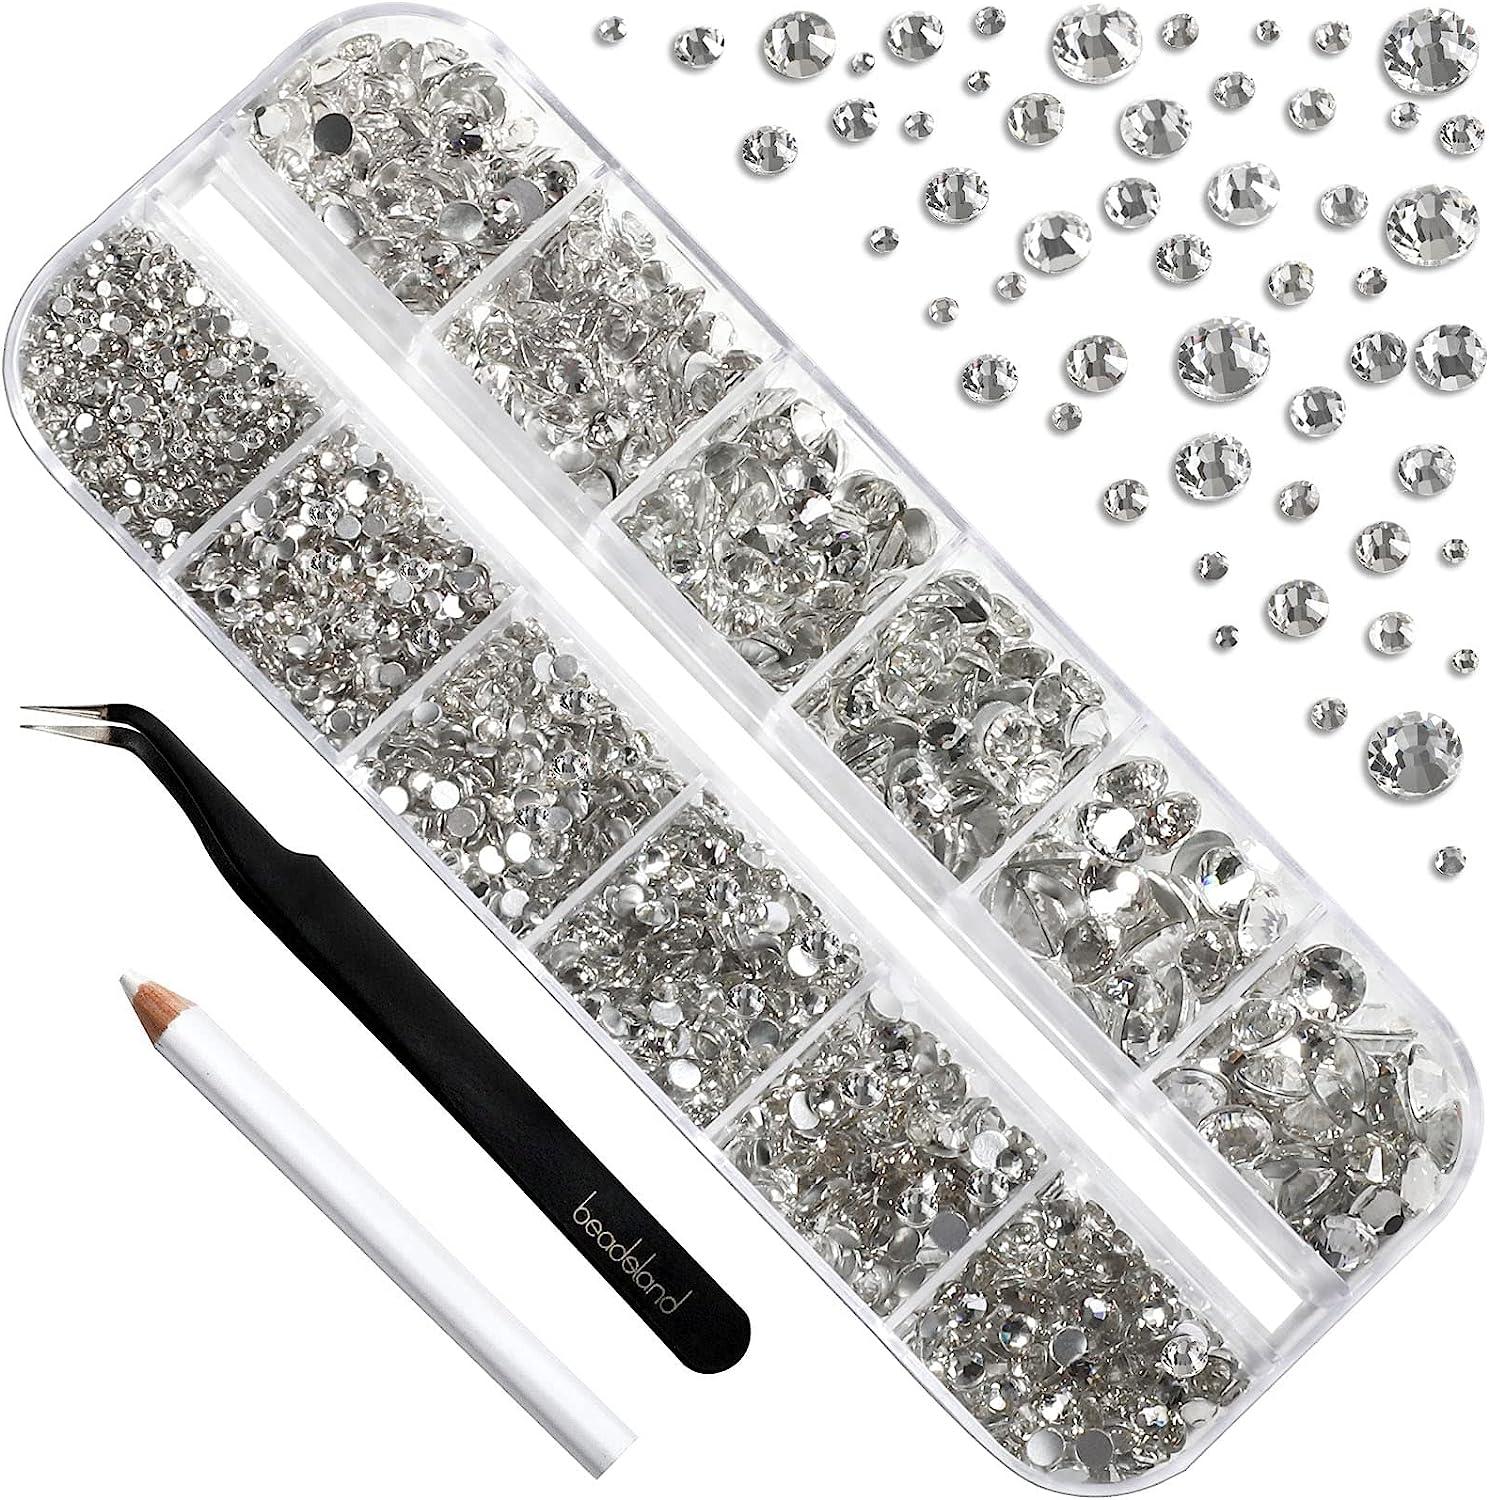 Beadsland Rhinestones for Makeup,8 Sizes 2500pcs Crystal Flatback